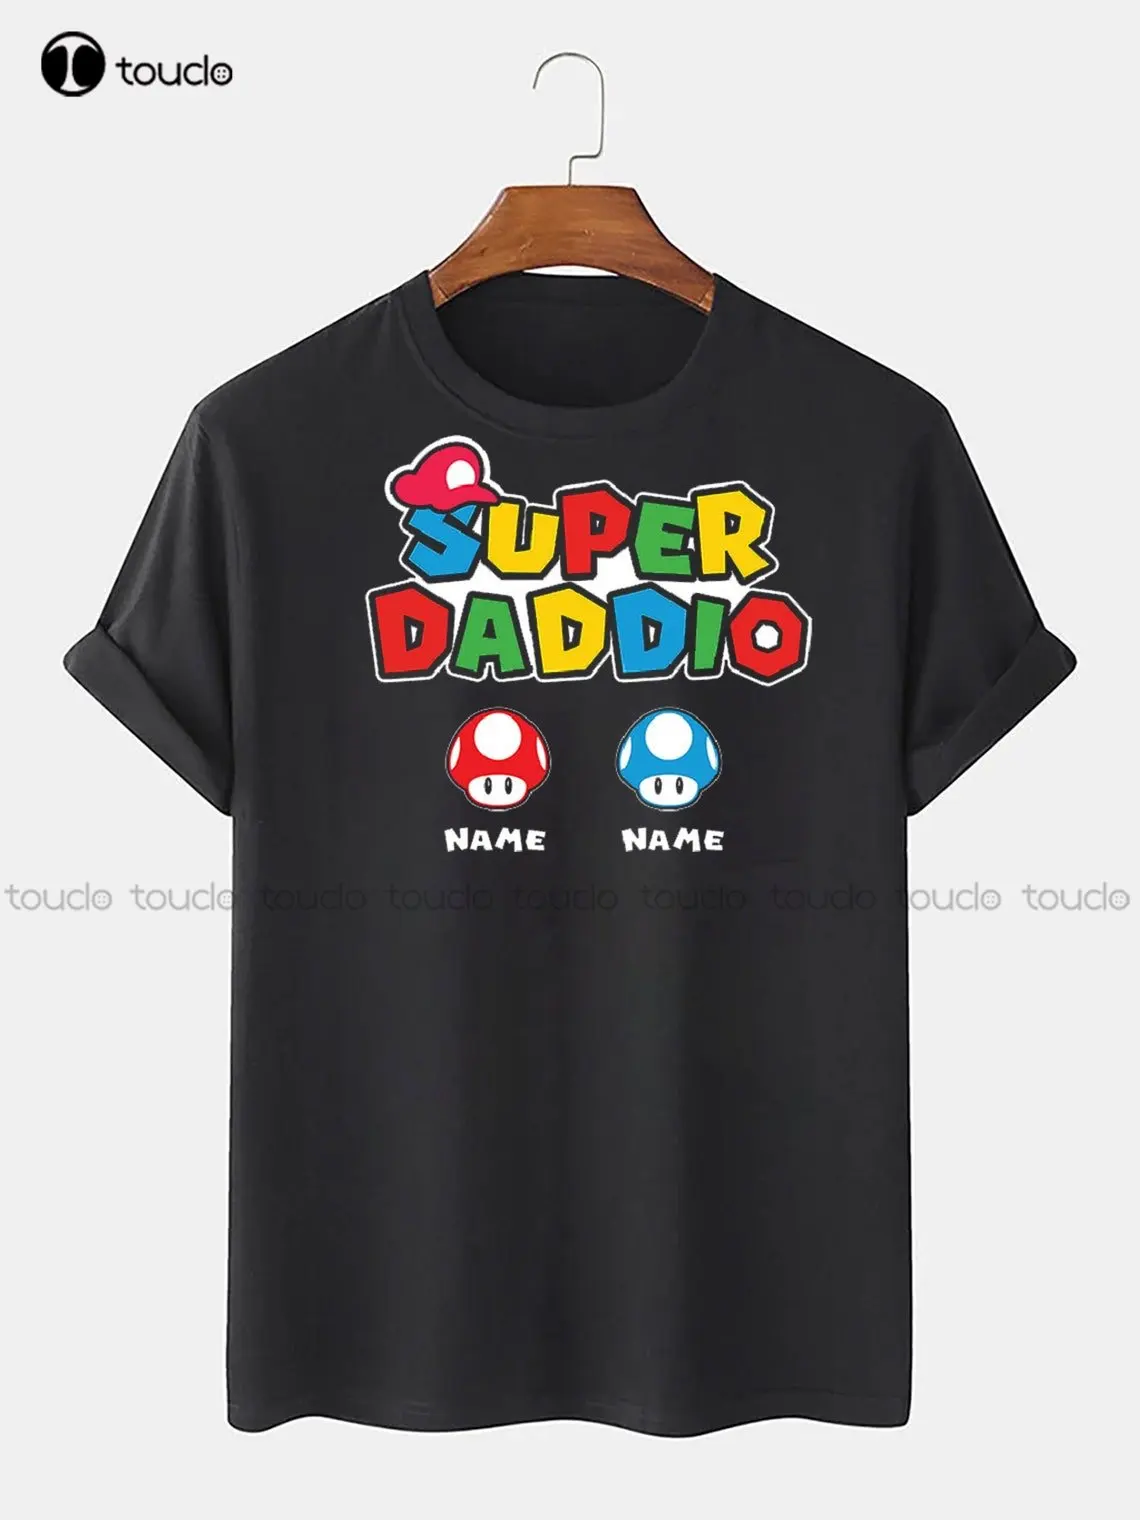 Super Daddio Shirt Fathers Day Shirt Dad Shirt Fathers Day Shirts Fathers Day Tee Dad Shirts 3Xl Shirts For Men New Popular New